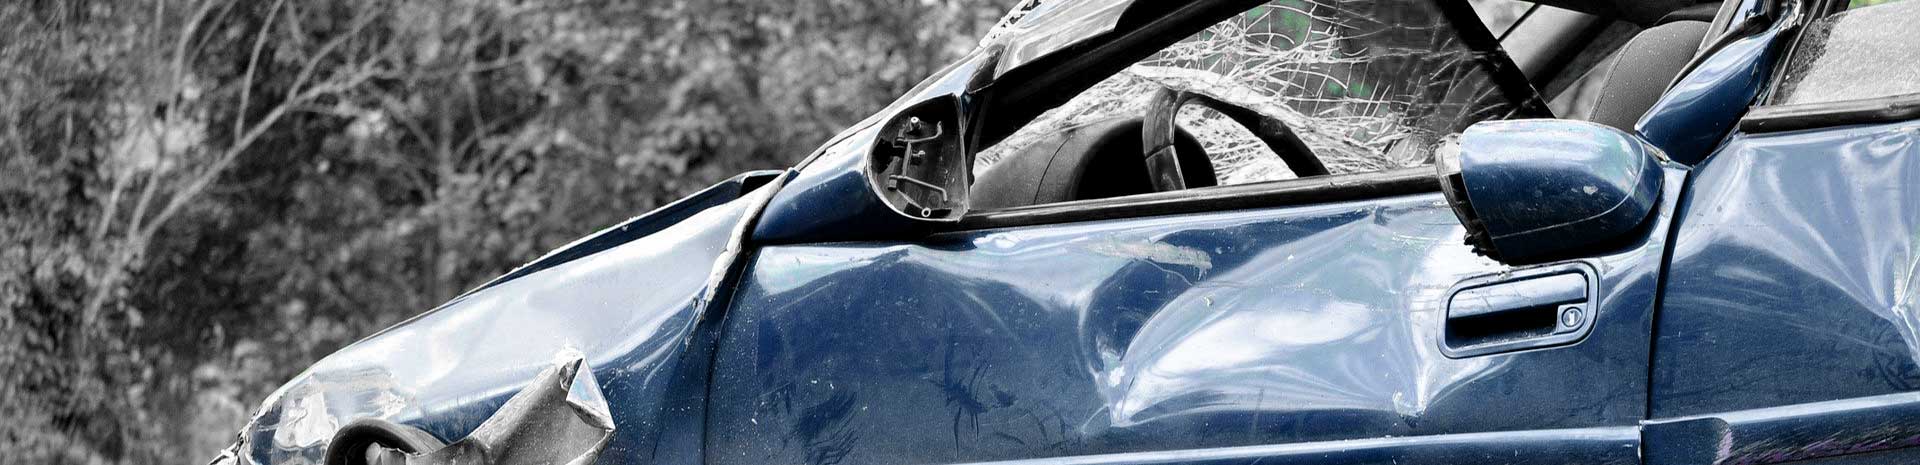 Aantal verkeersslachtoffers moet worden verminderd | Letselschadebureau LetselPro